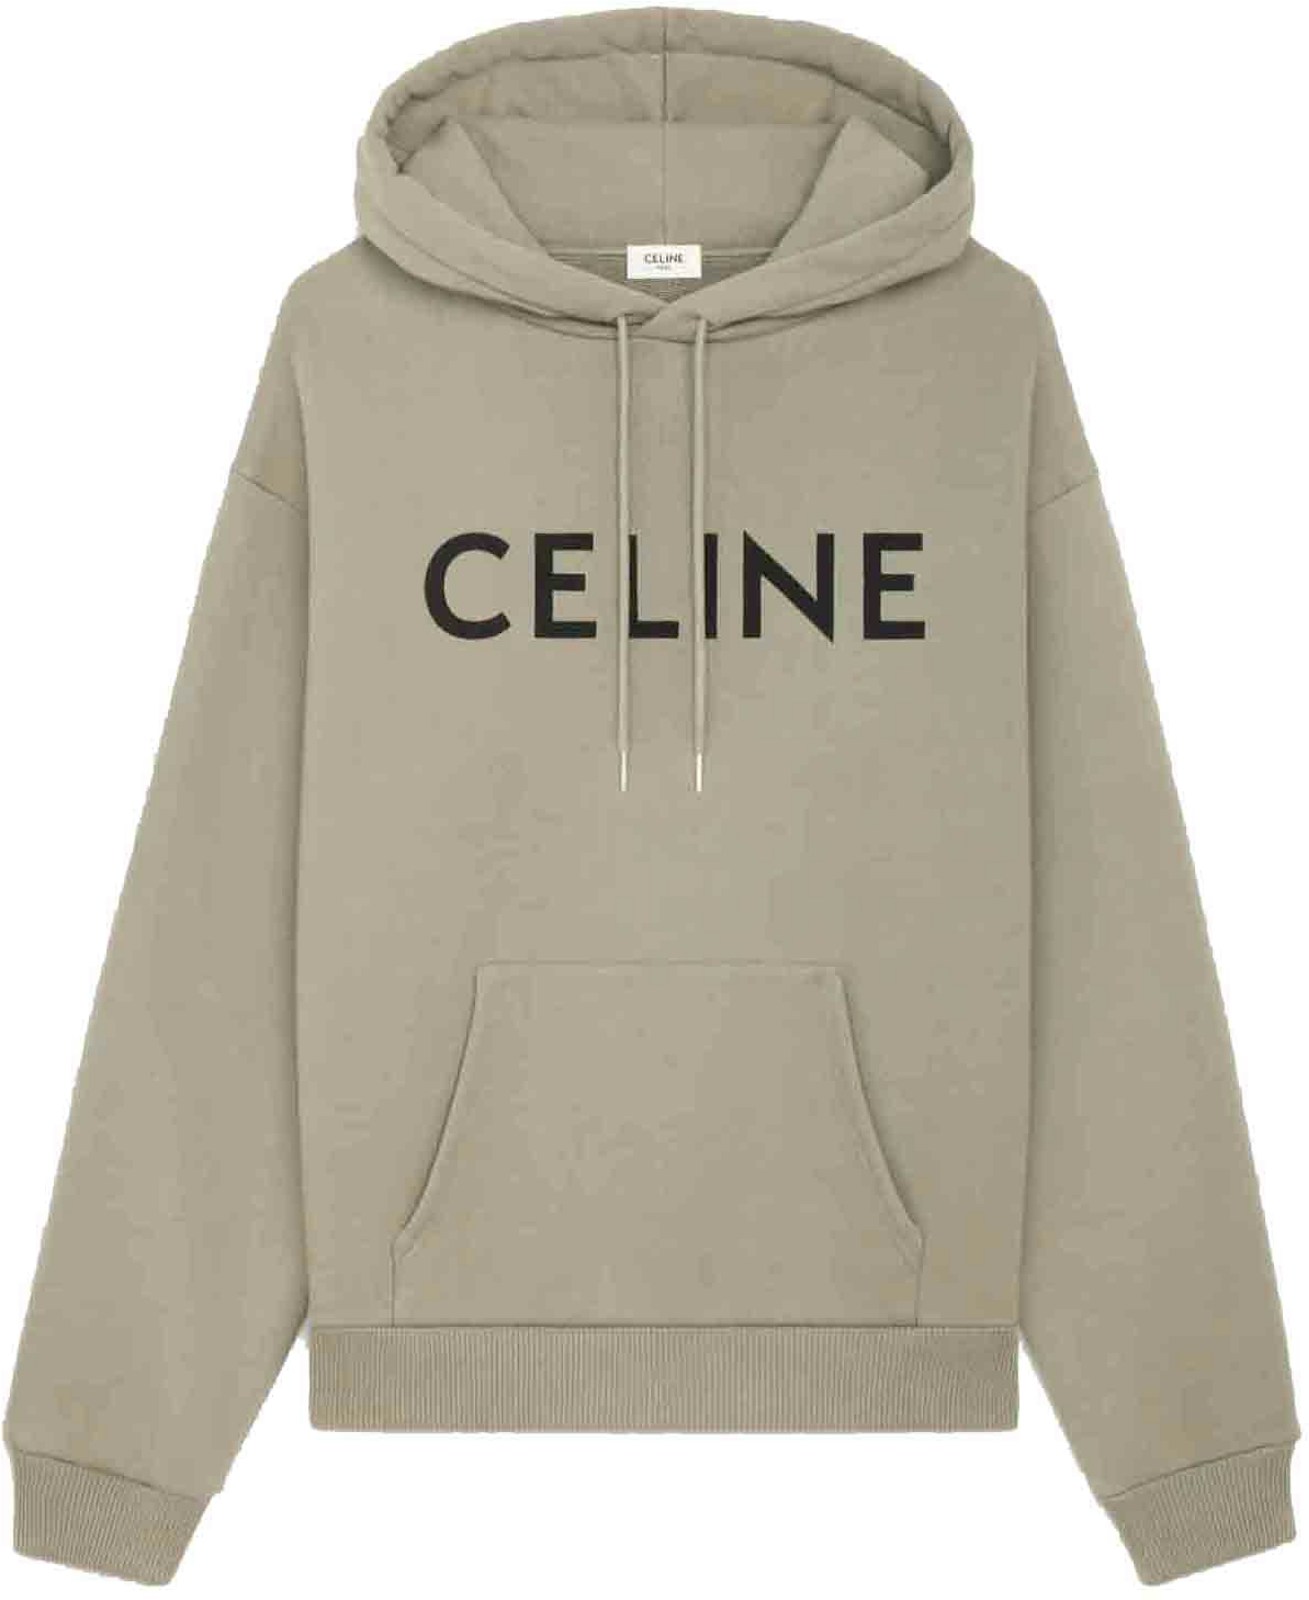 Celine Loose Celine Print Hoodie in Cotton Fleece Khaki/Black